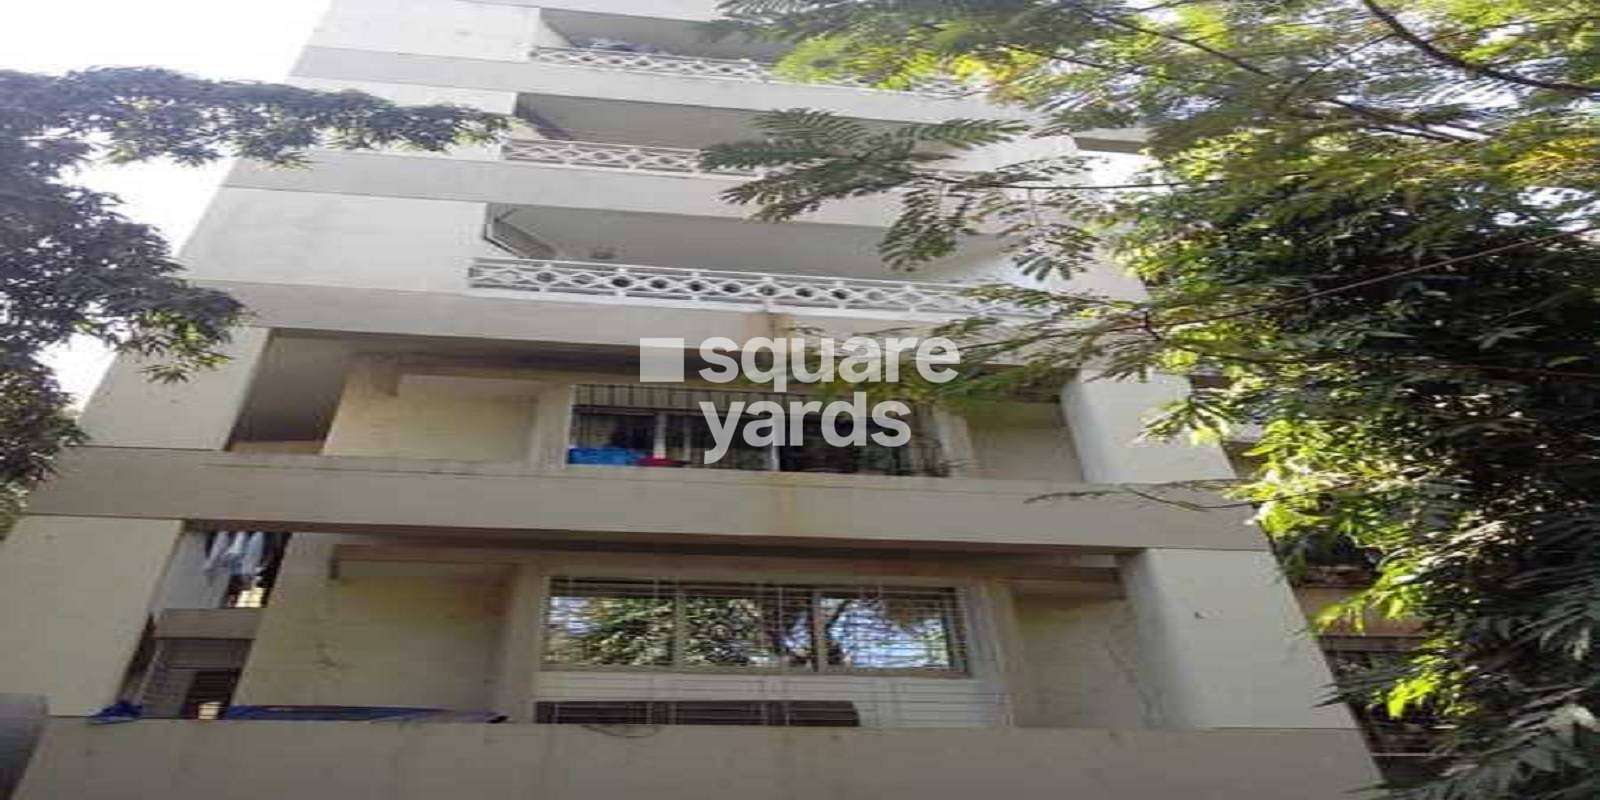 Bhav Bindu Apartment Cover Image